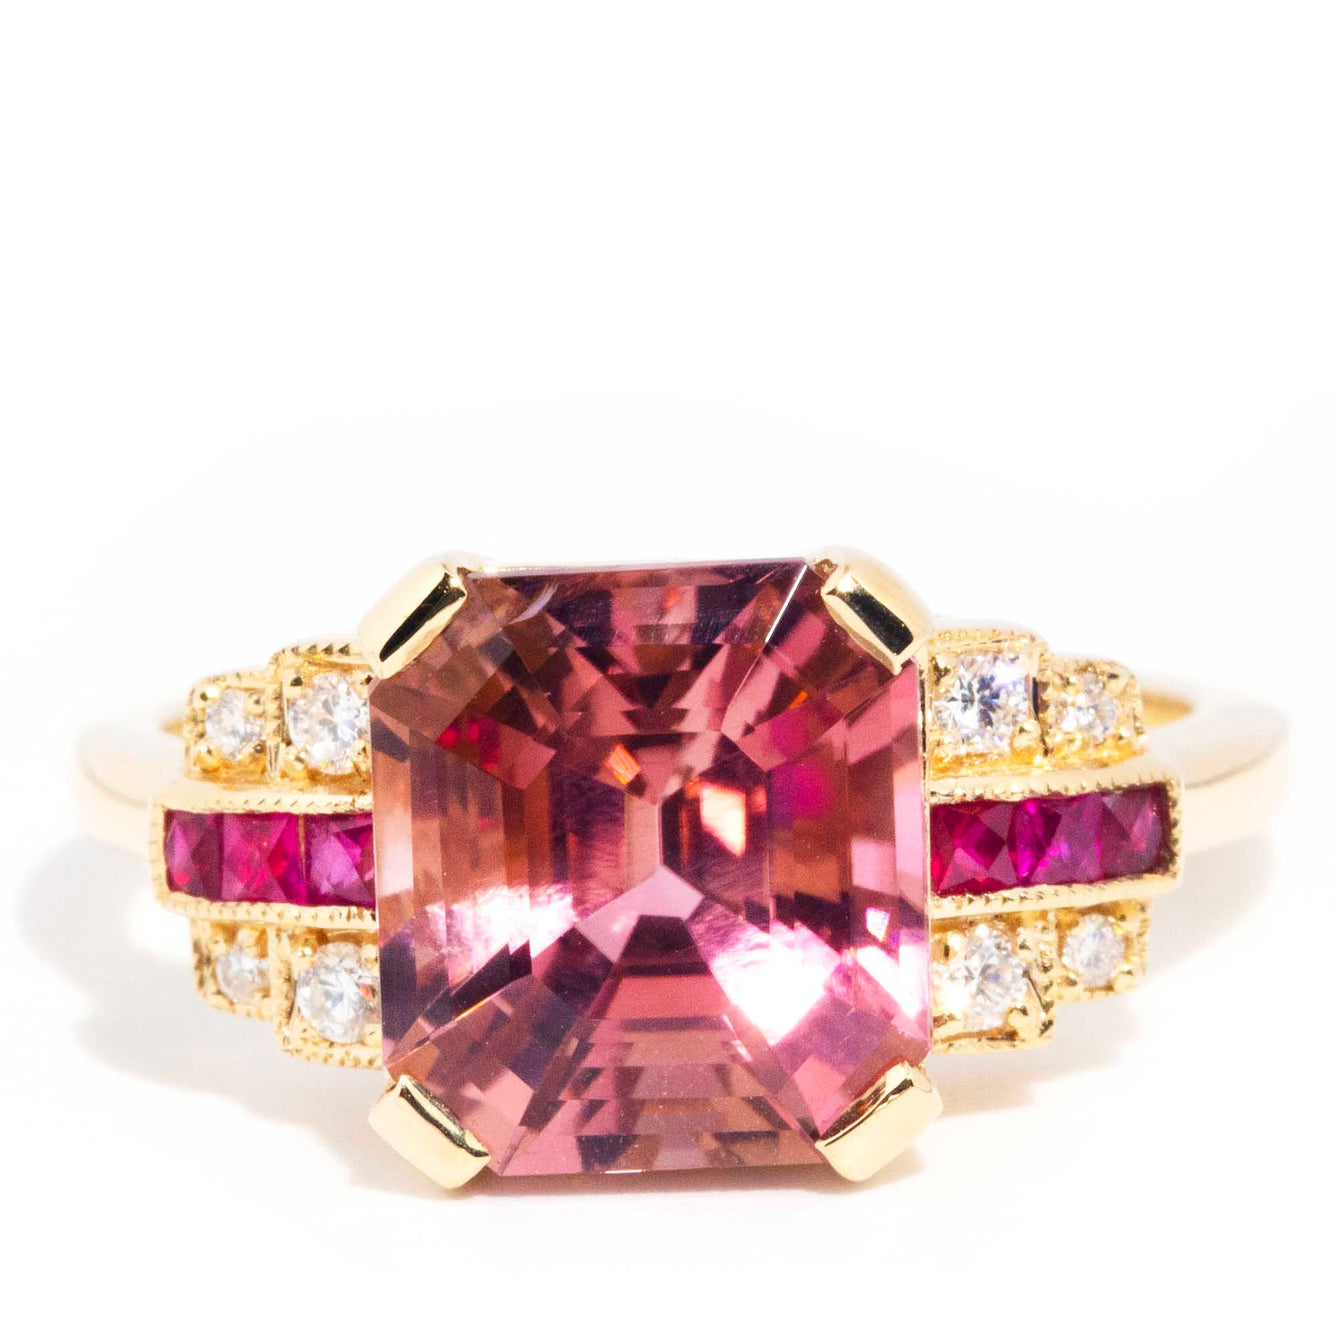 18ct White Gold Oval Cut Dark Pink Tourmaline Ring with Diamond Halo